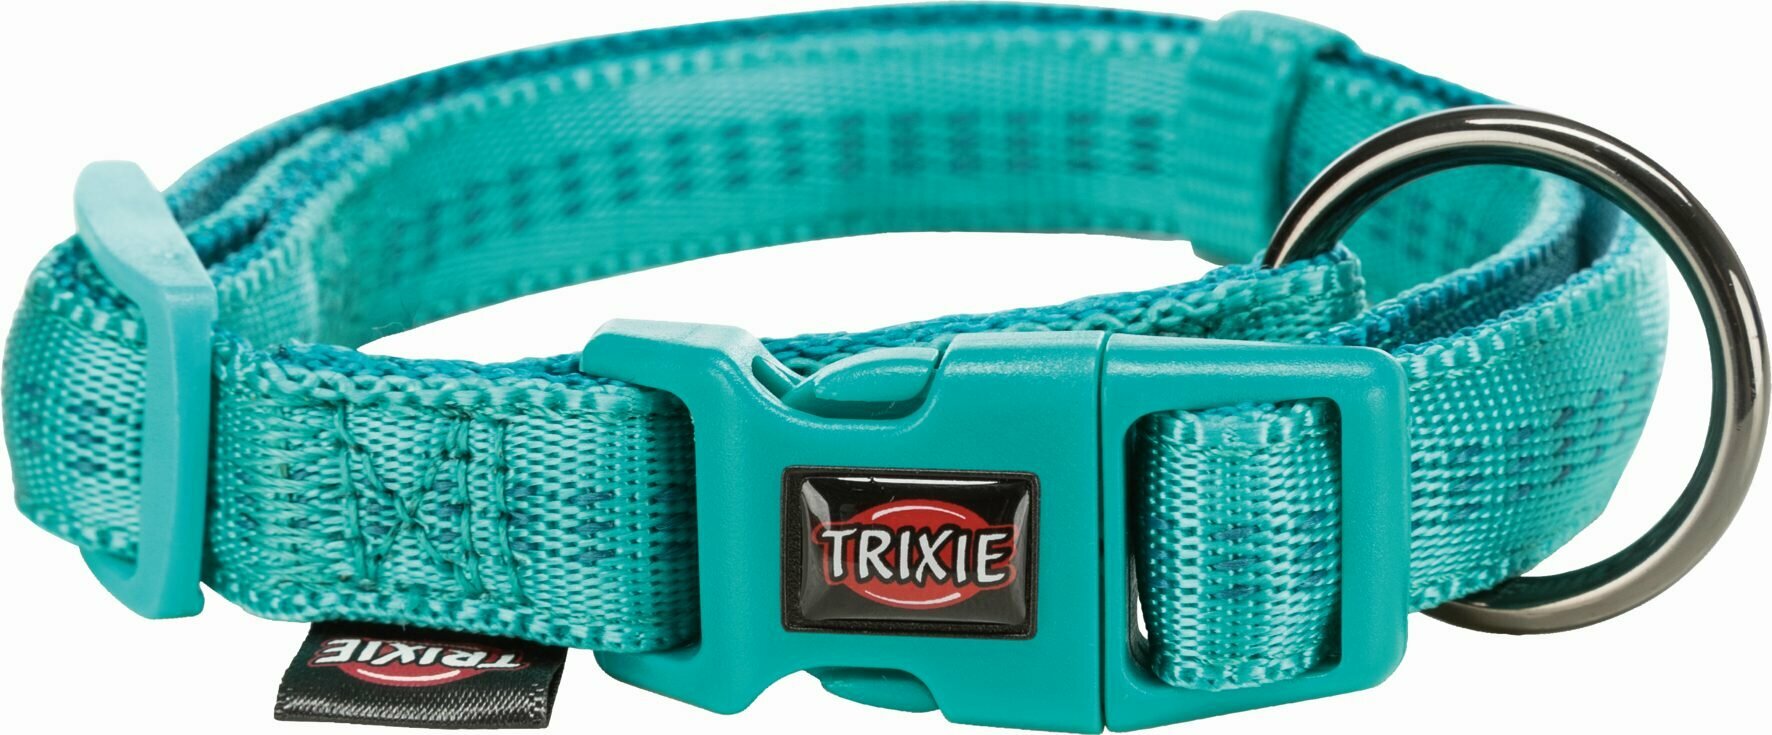 Ошейник Trixie Softline Elegance океан-петроль для собак (XS–S: 25–35 см х 15 мм, Океан/петроль)